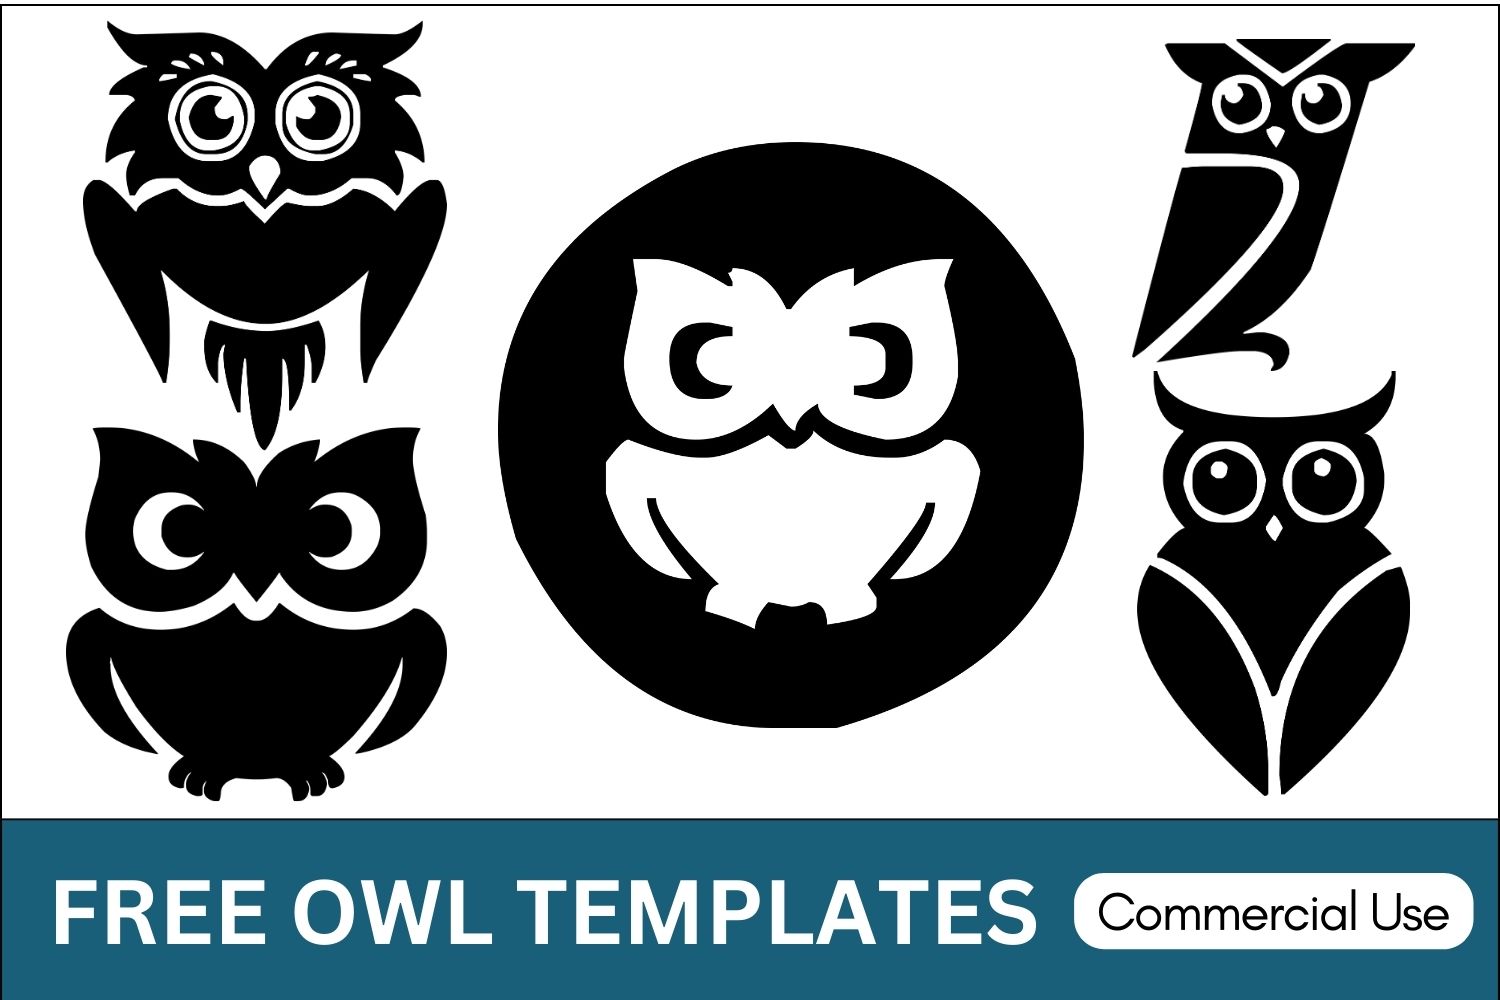 Owl templates, Owl Outline SVG, Cute owl, cricut cut file, Sweet owl, Kawaii Animal, owl Silhouette, Free download, alt clipart, printable